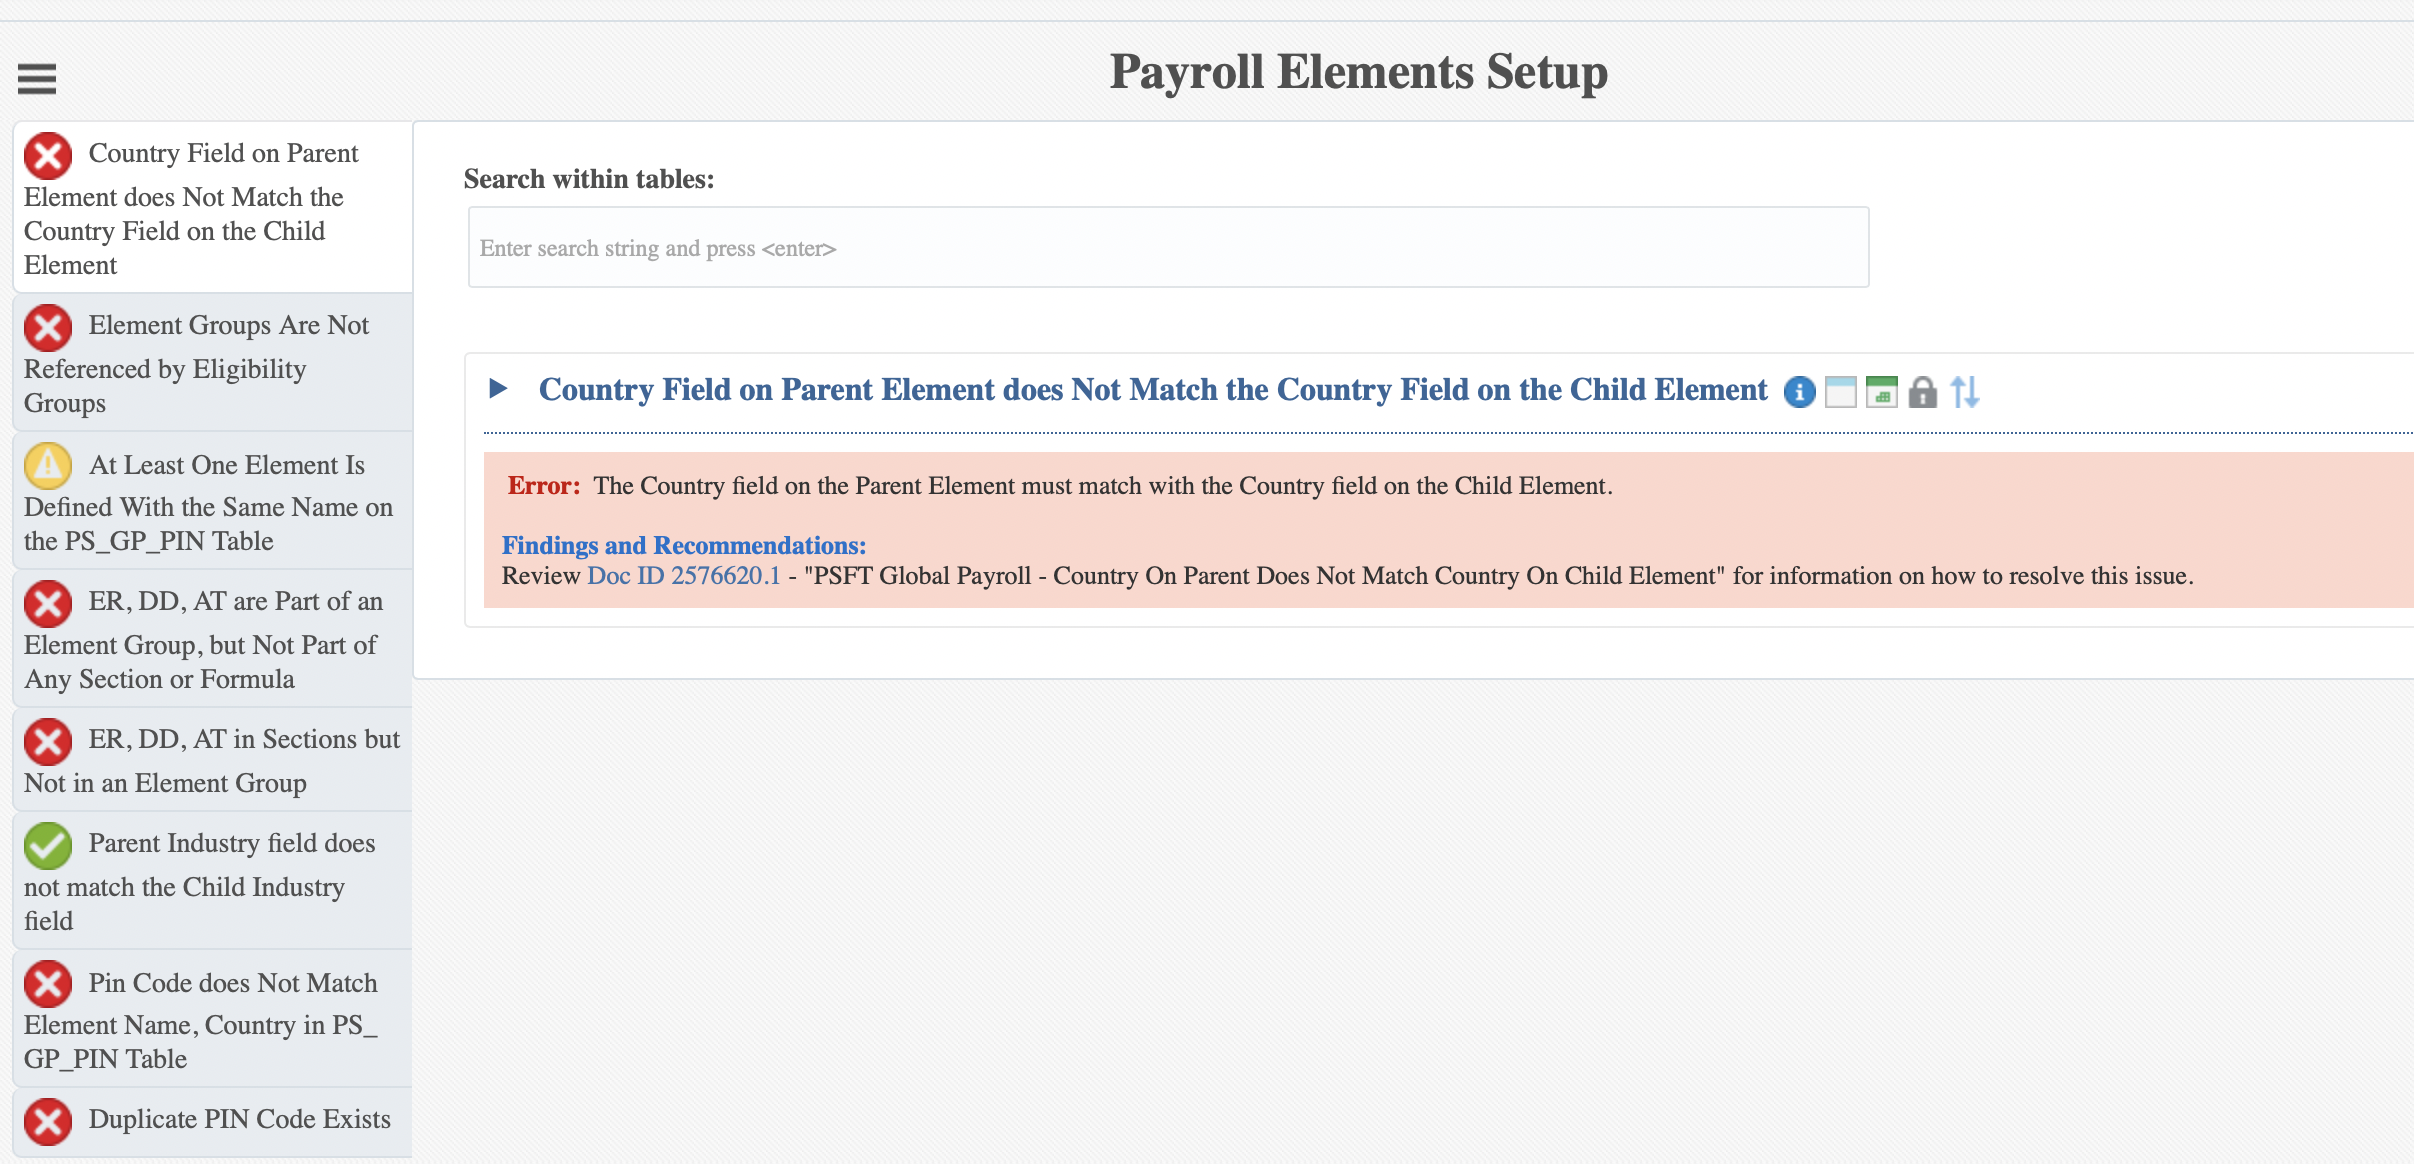 Payroll Elements Setup